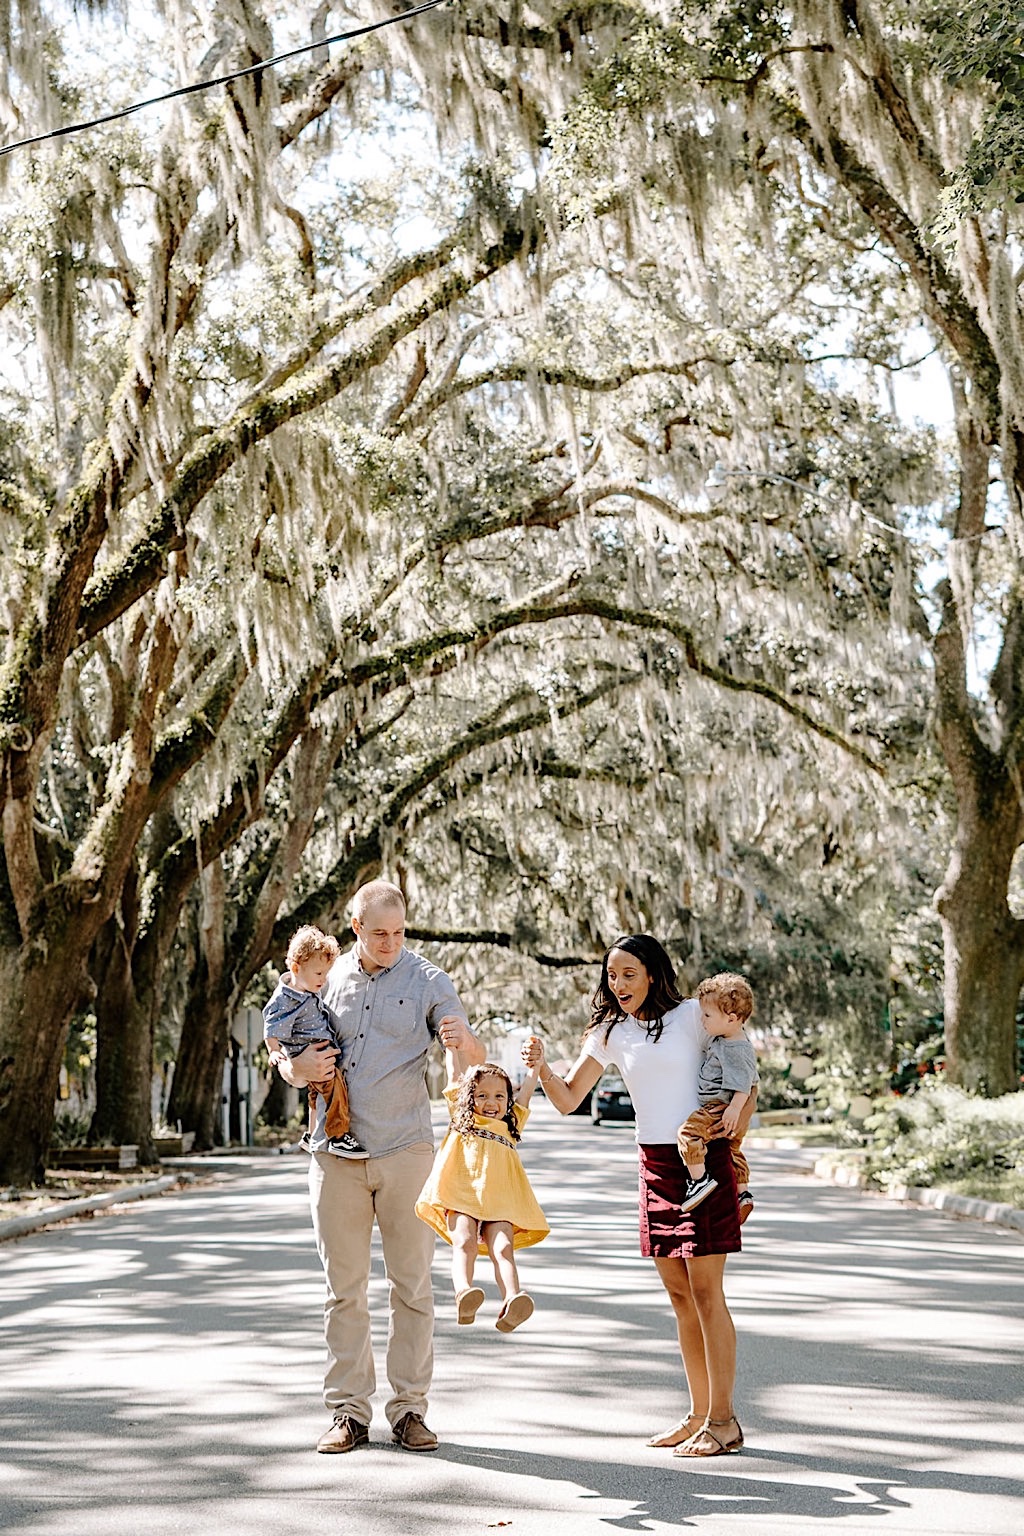 Magnolia Avenue family photo shoot